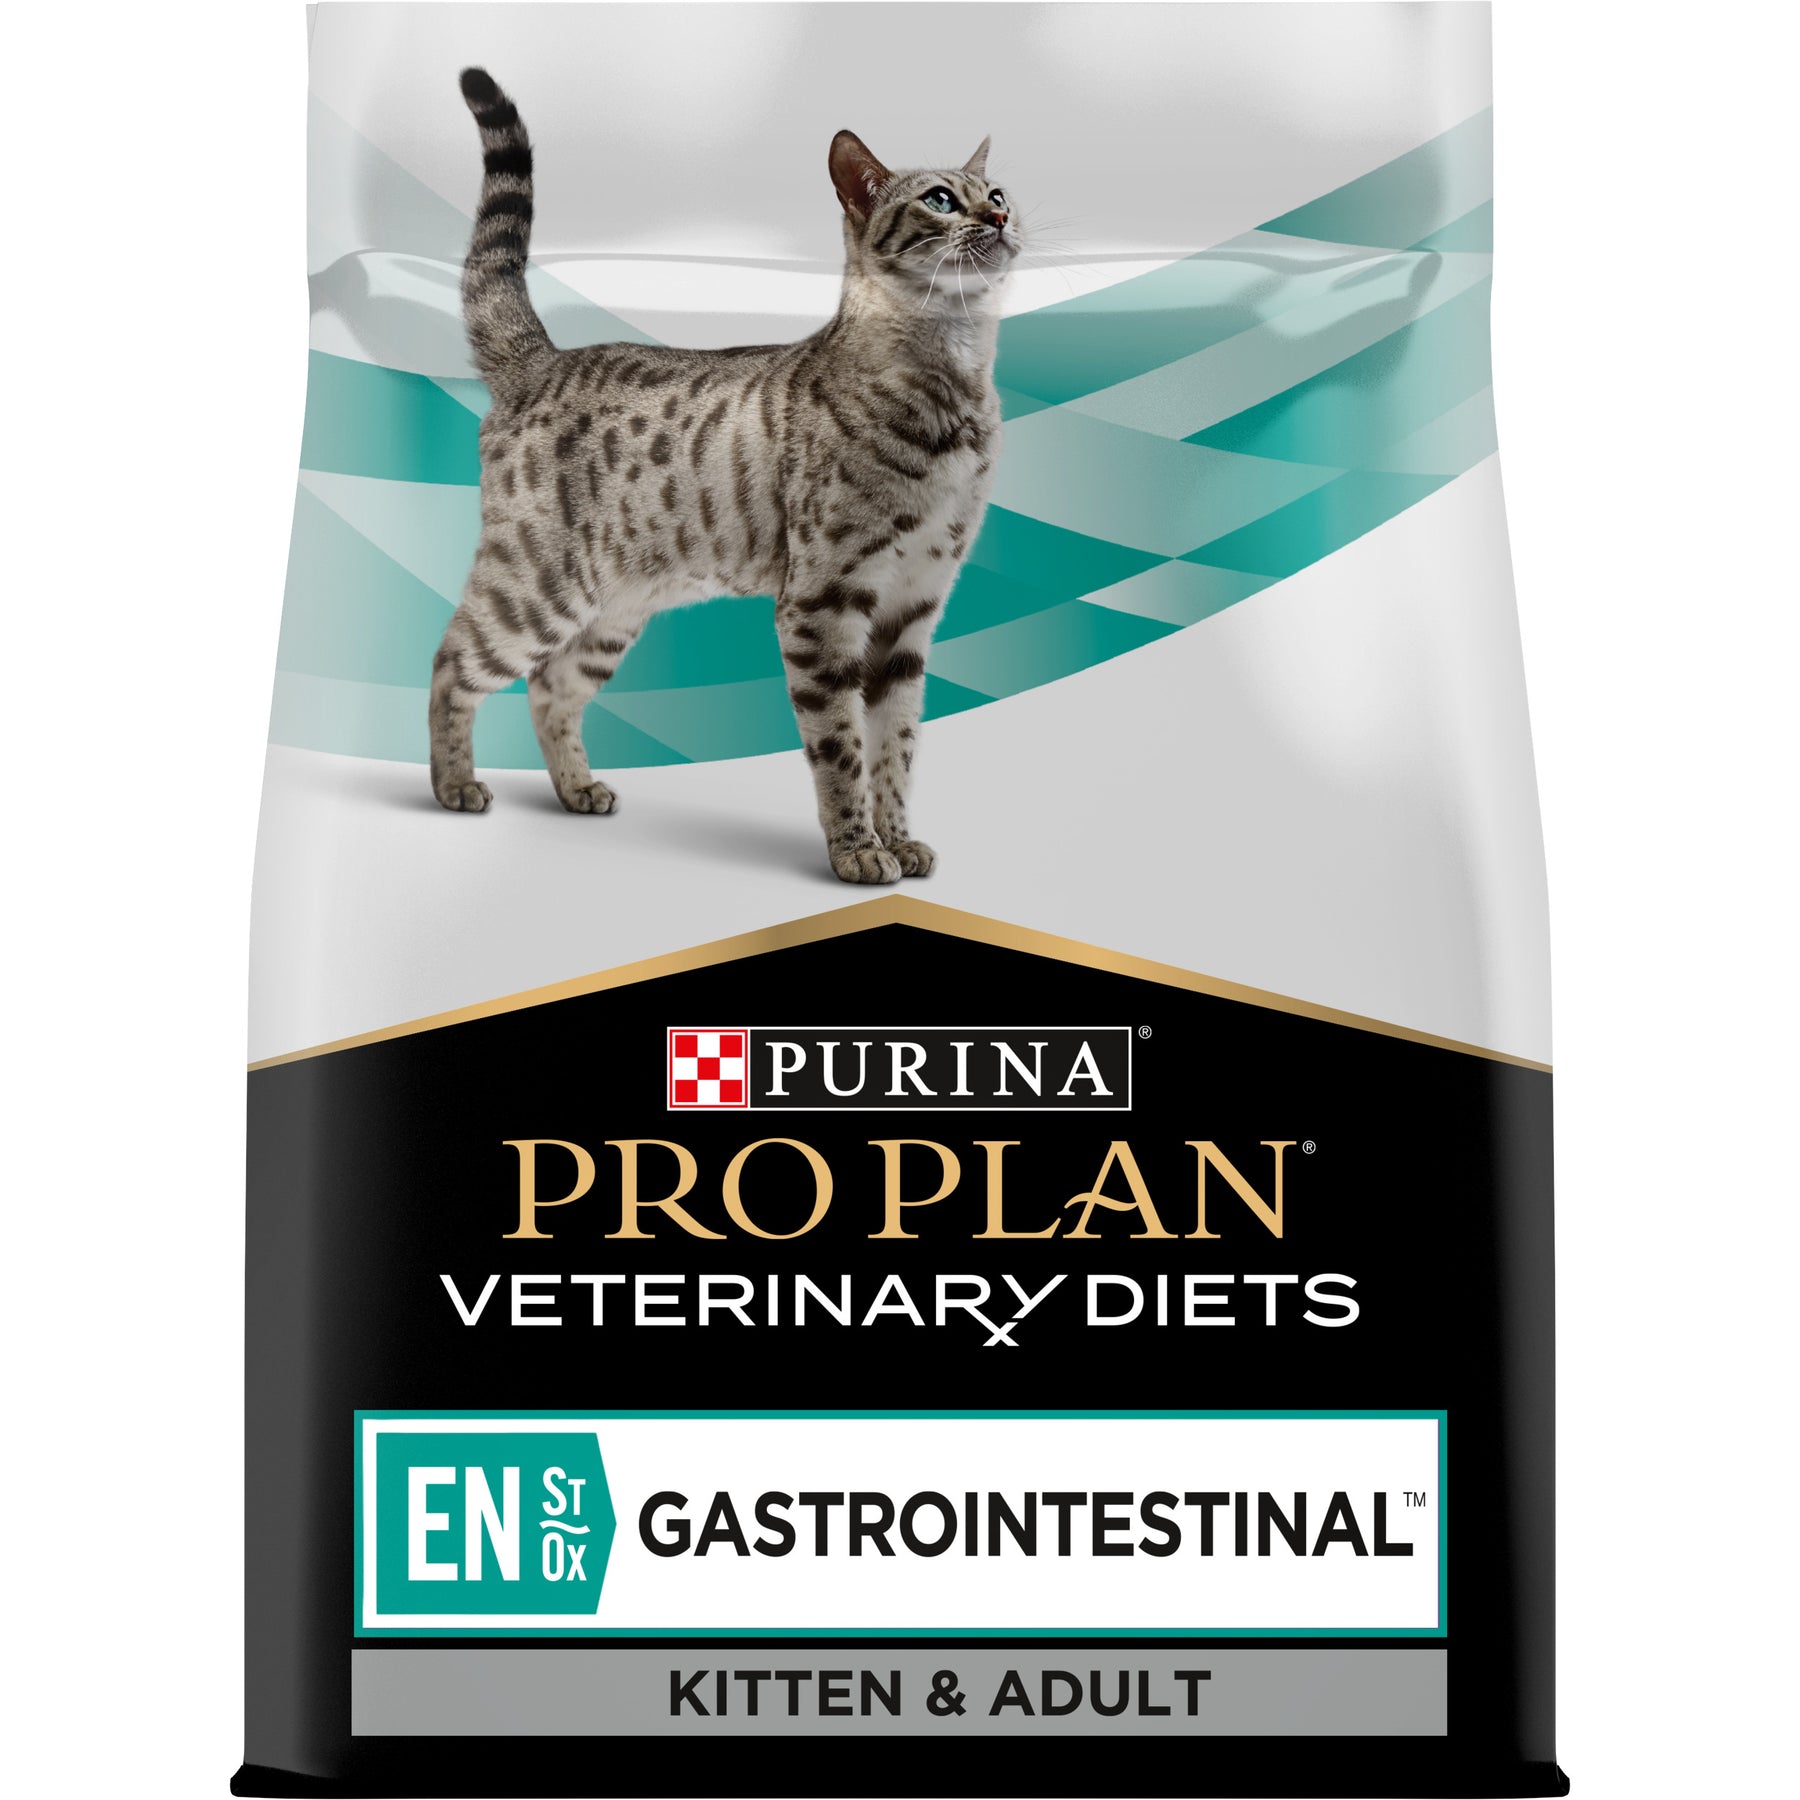 PURINA® PRO PLAN® Veterinary Diets - Feline EN ST/OX Gastrointestinal